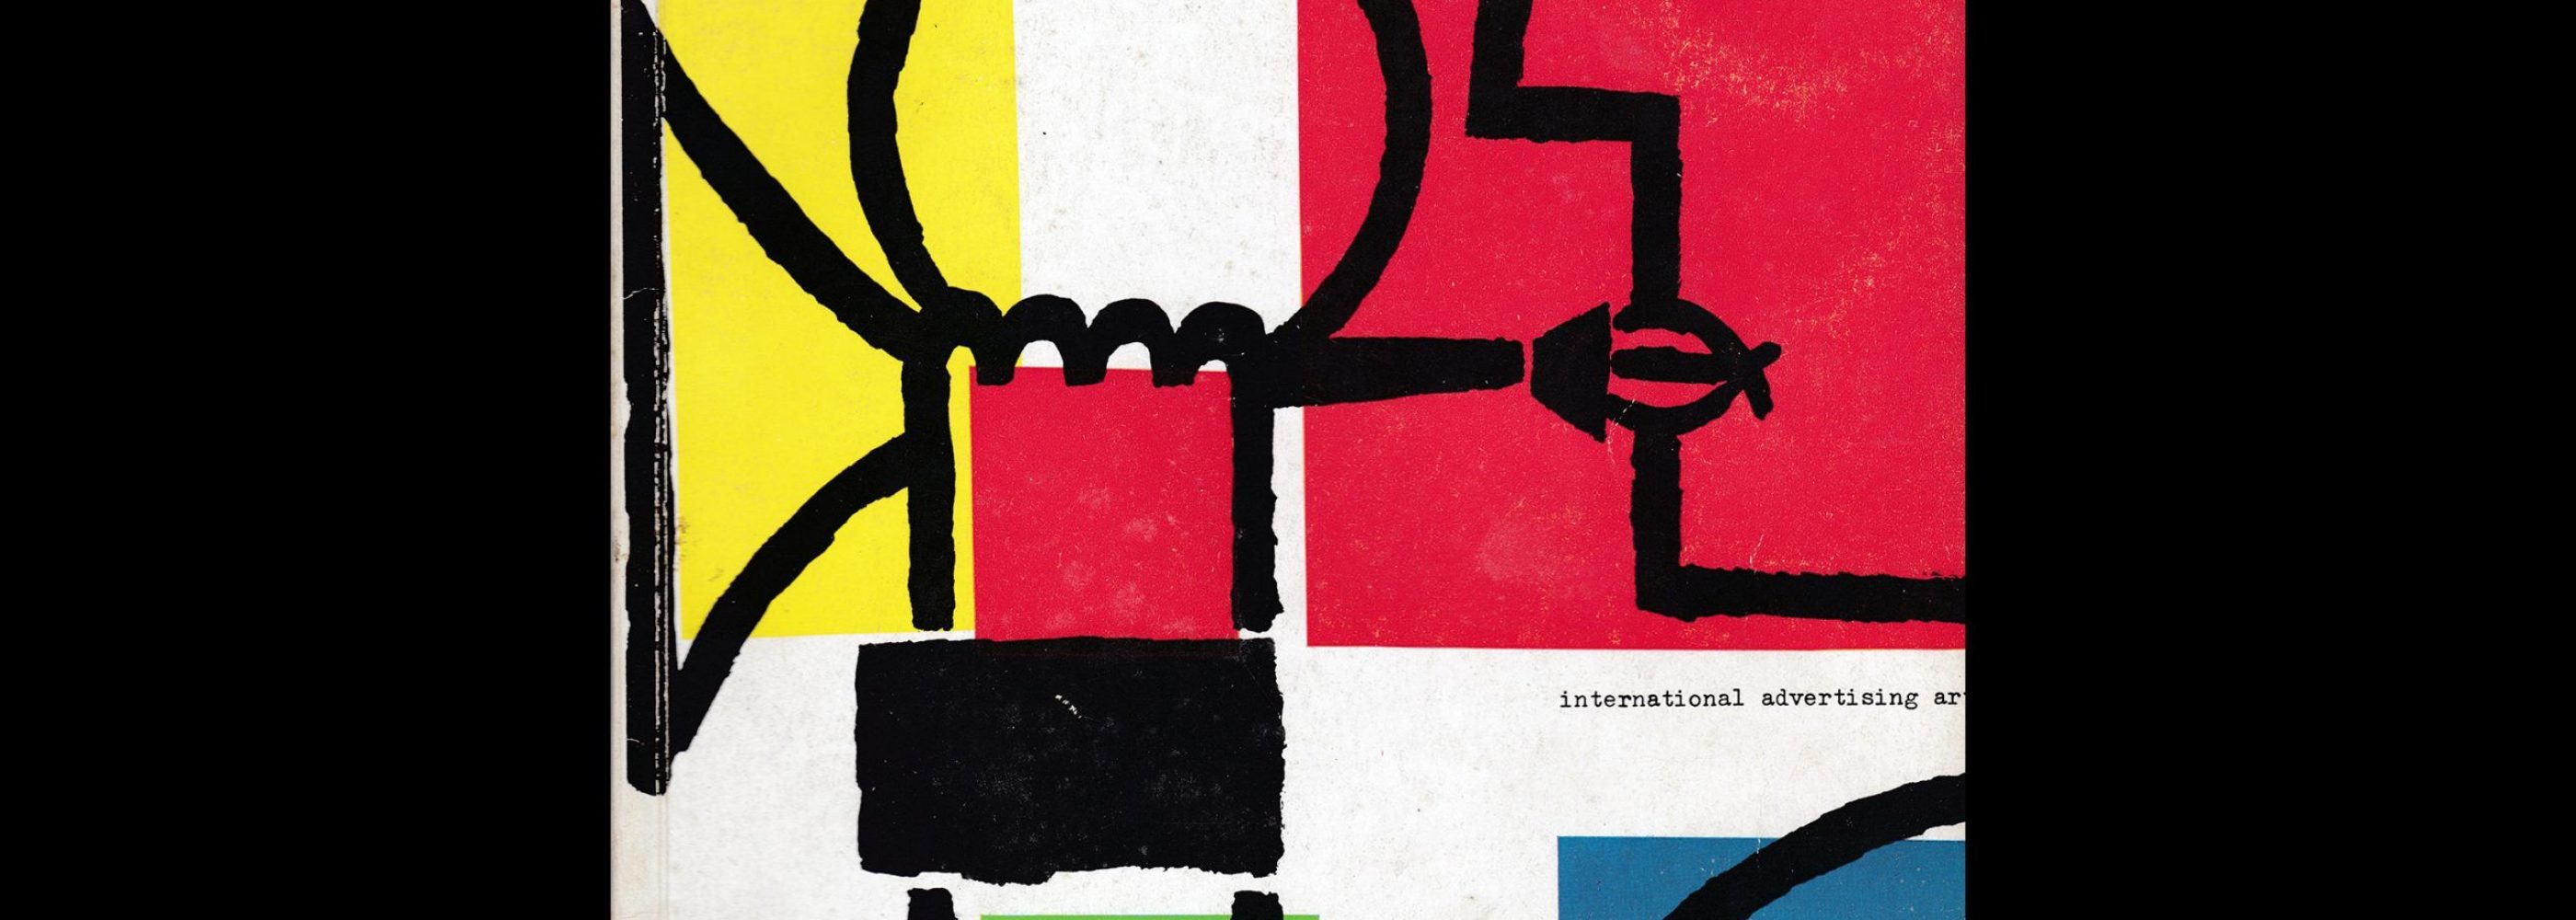 Gebrauchsgraphik, 10, 1957 cover by Felix Müller and Karl Oskar Blase (Muller-Blase)